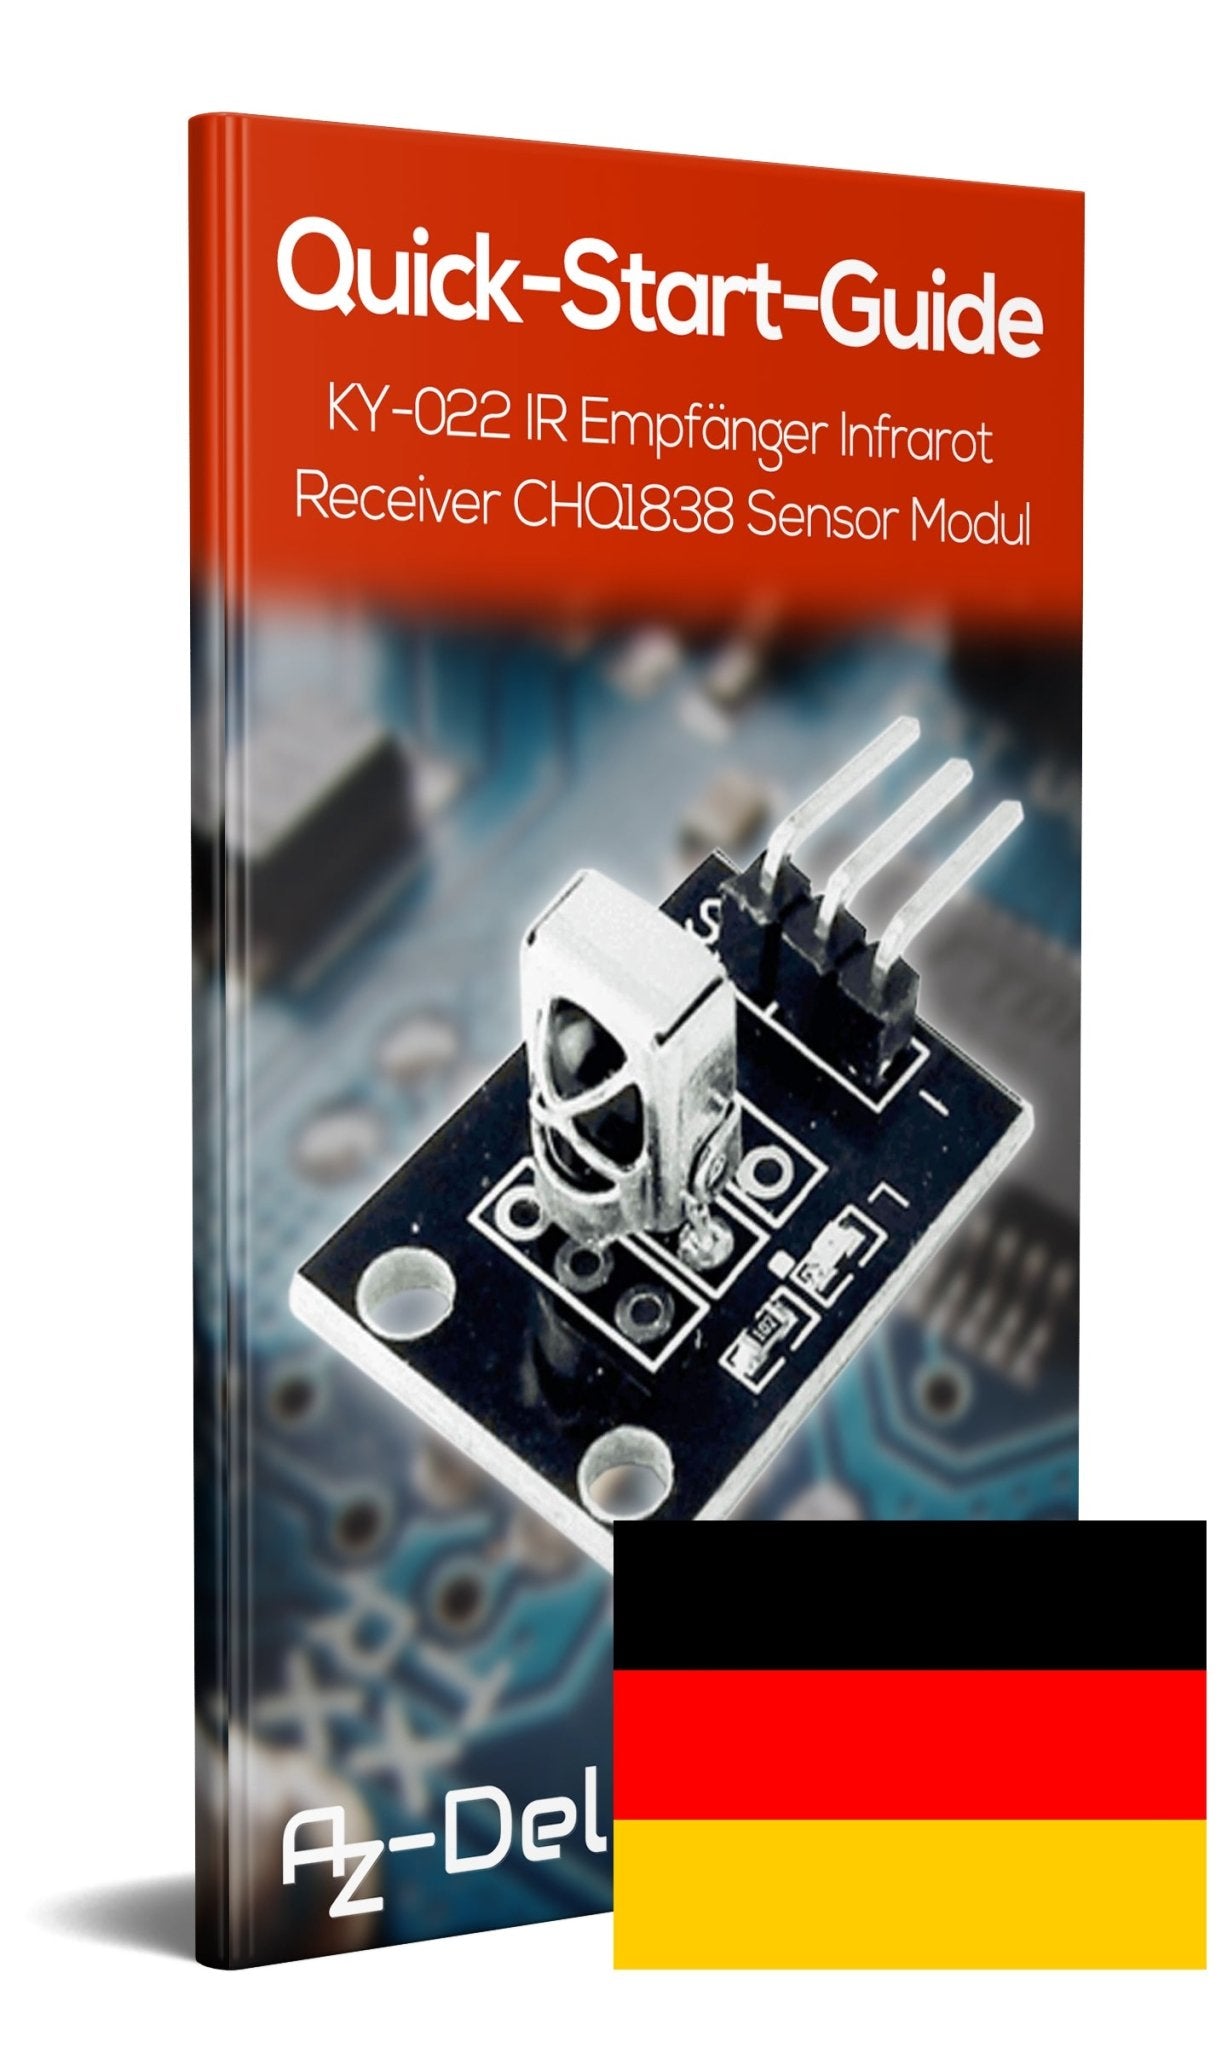 KY-022 Set IR Empfänger Infrarot Receiver CHQ1838 Sensor Modul - AZ-Delivery